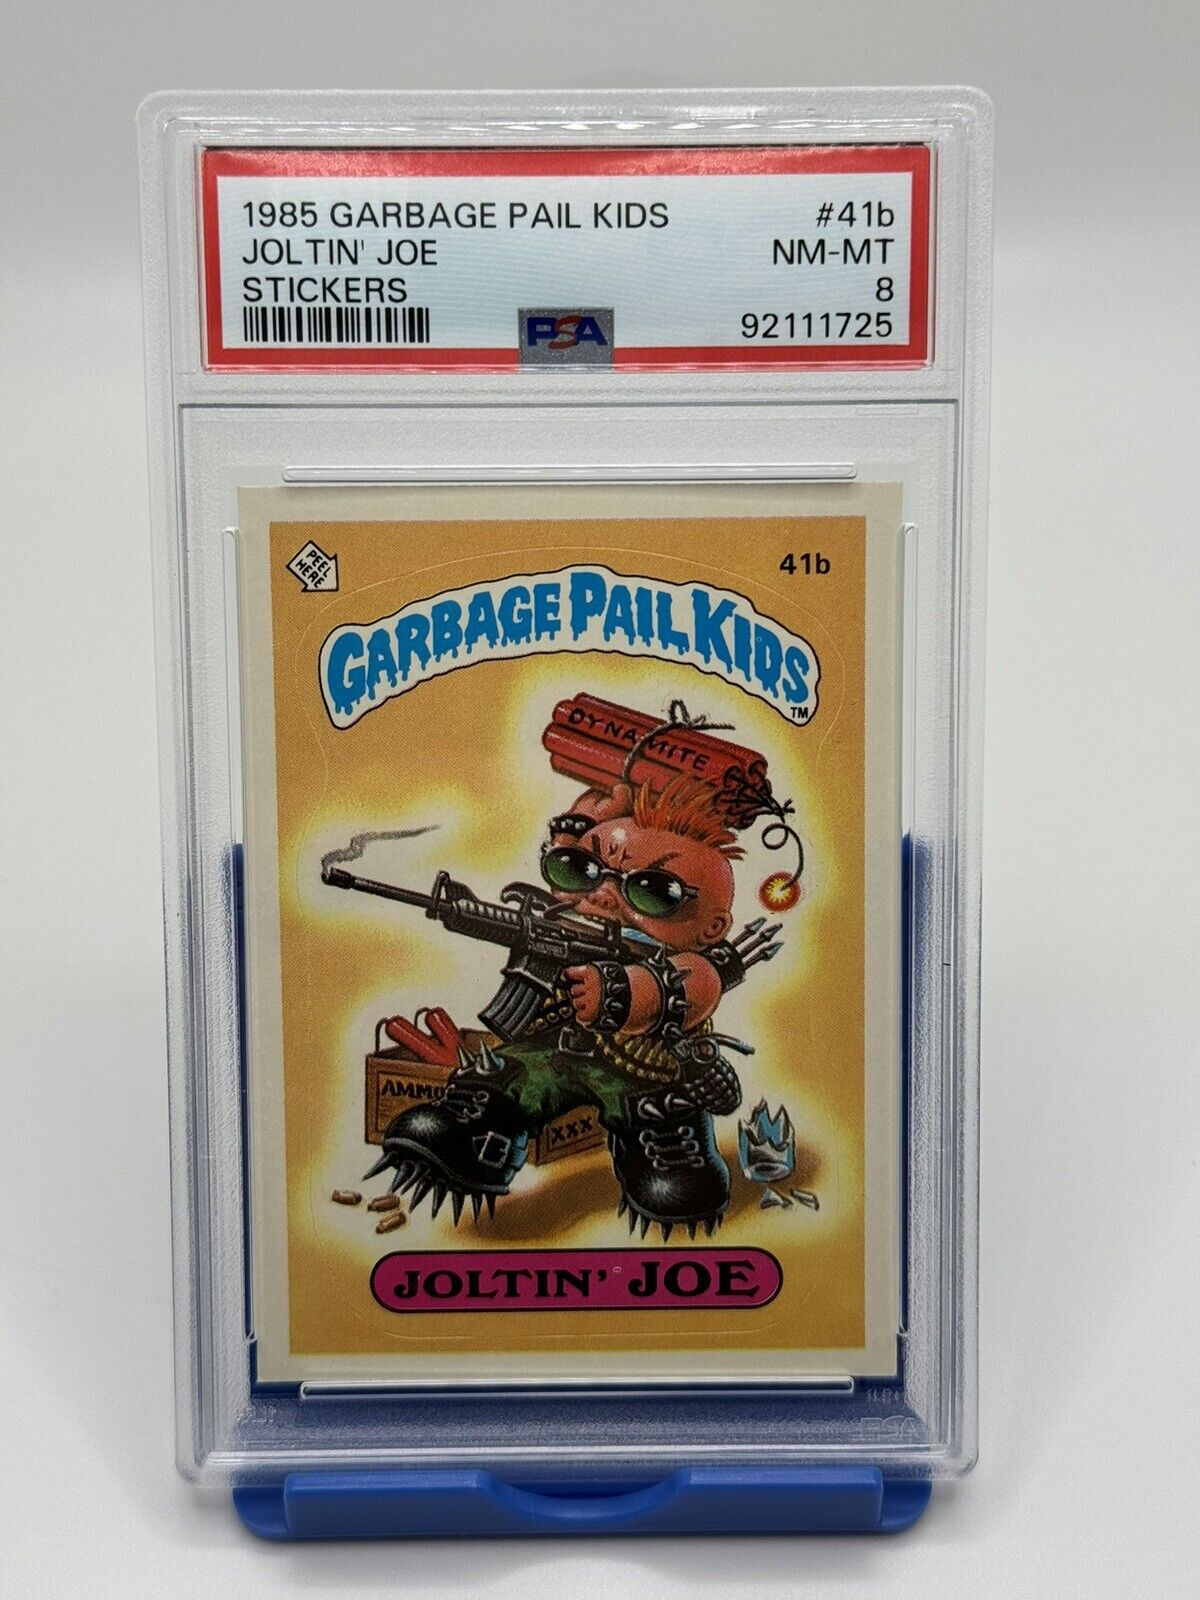 1985 Garbage Pail Kids Stickers #41b Joltin' Joe OS Series 1 PSA 8 NM-MT Matte